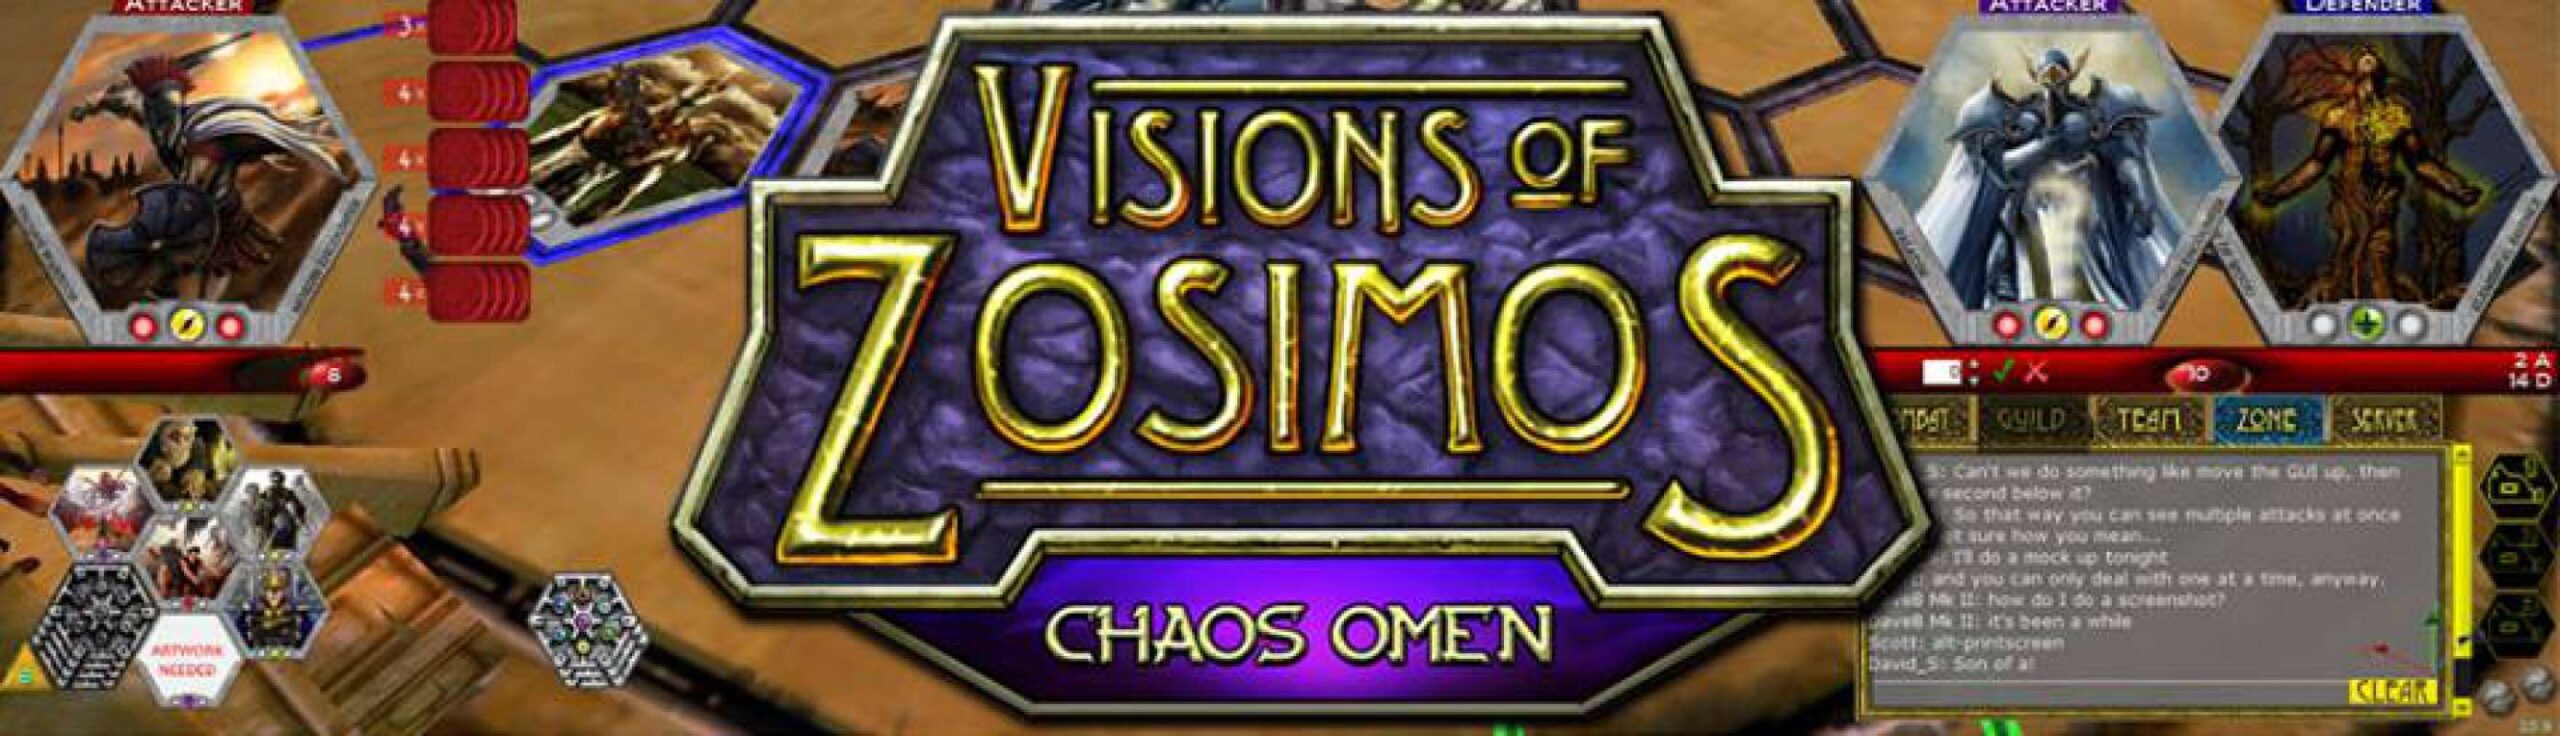 Vision of Zosimos